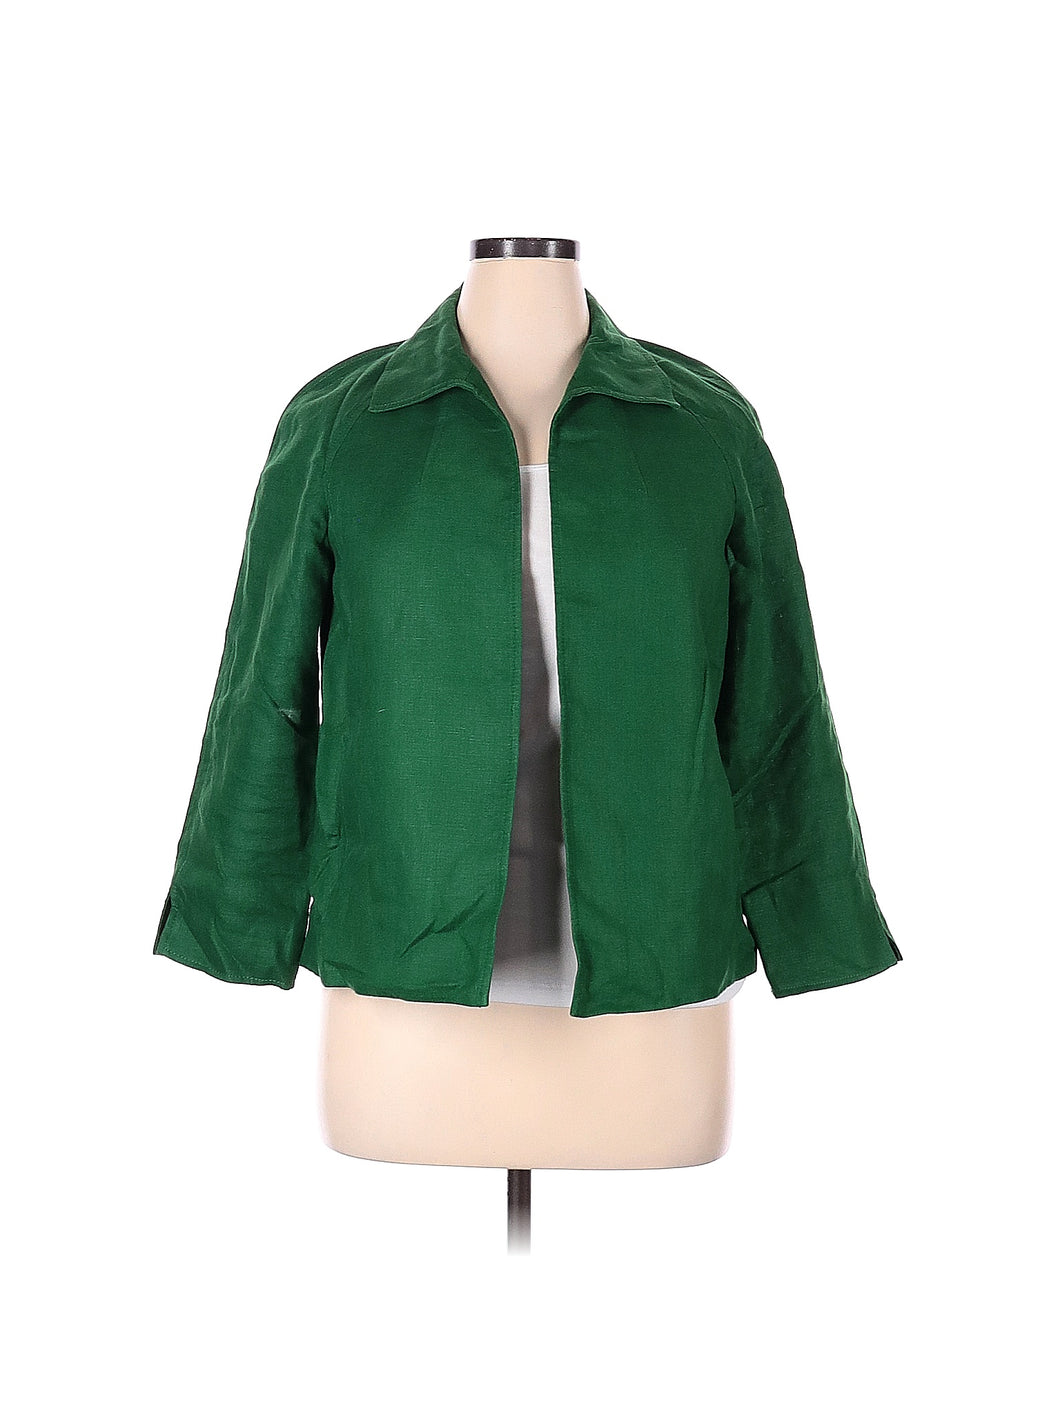 Green Linen Jacket - Small